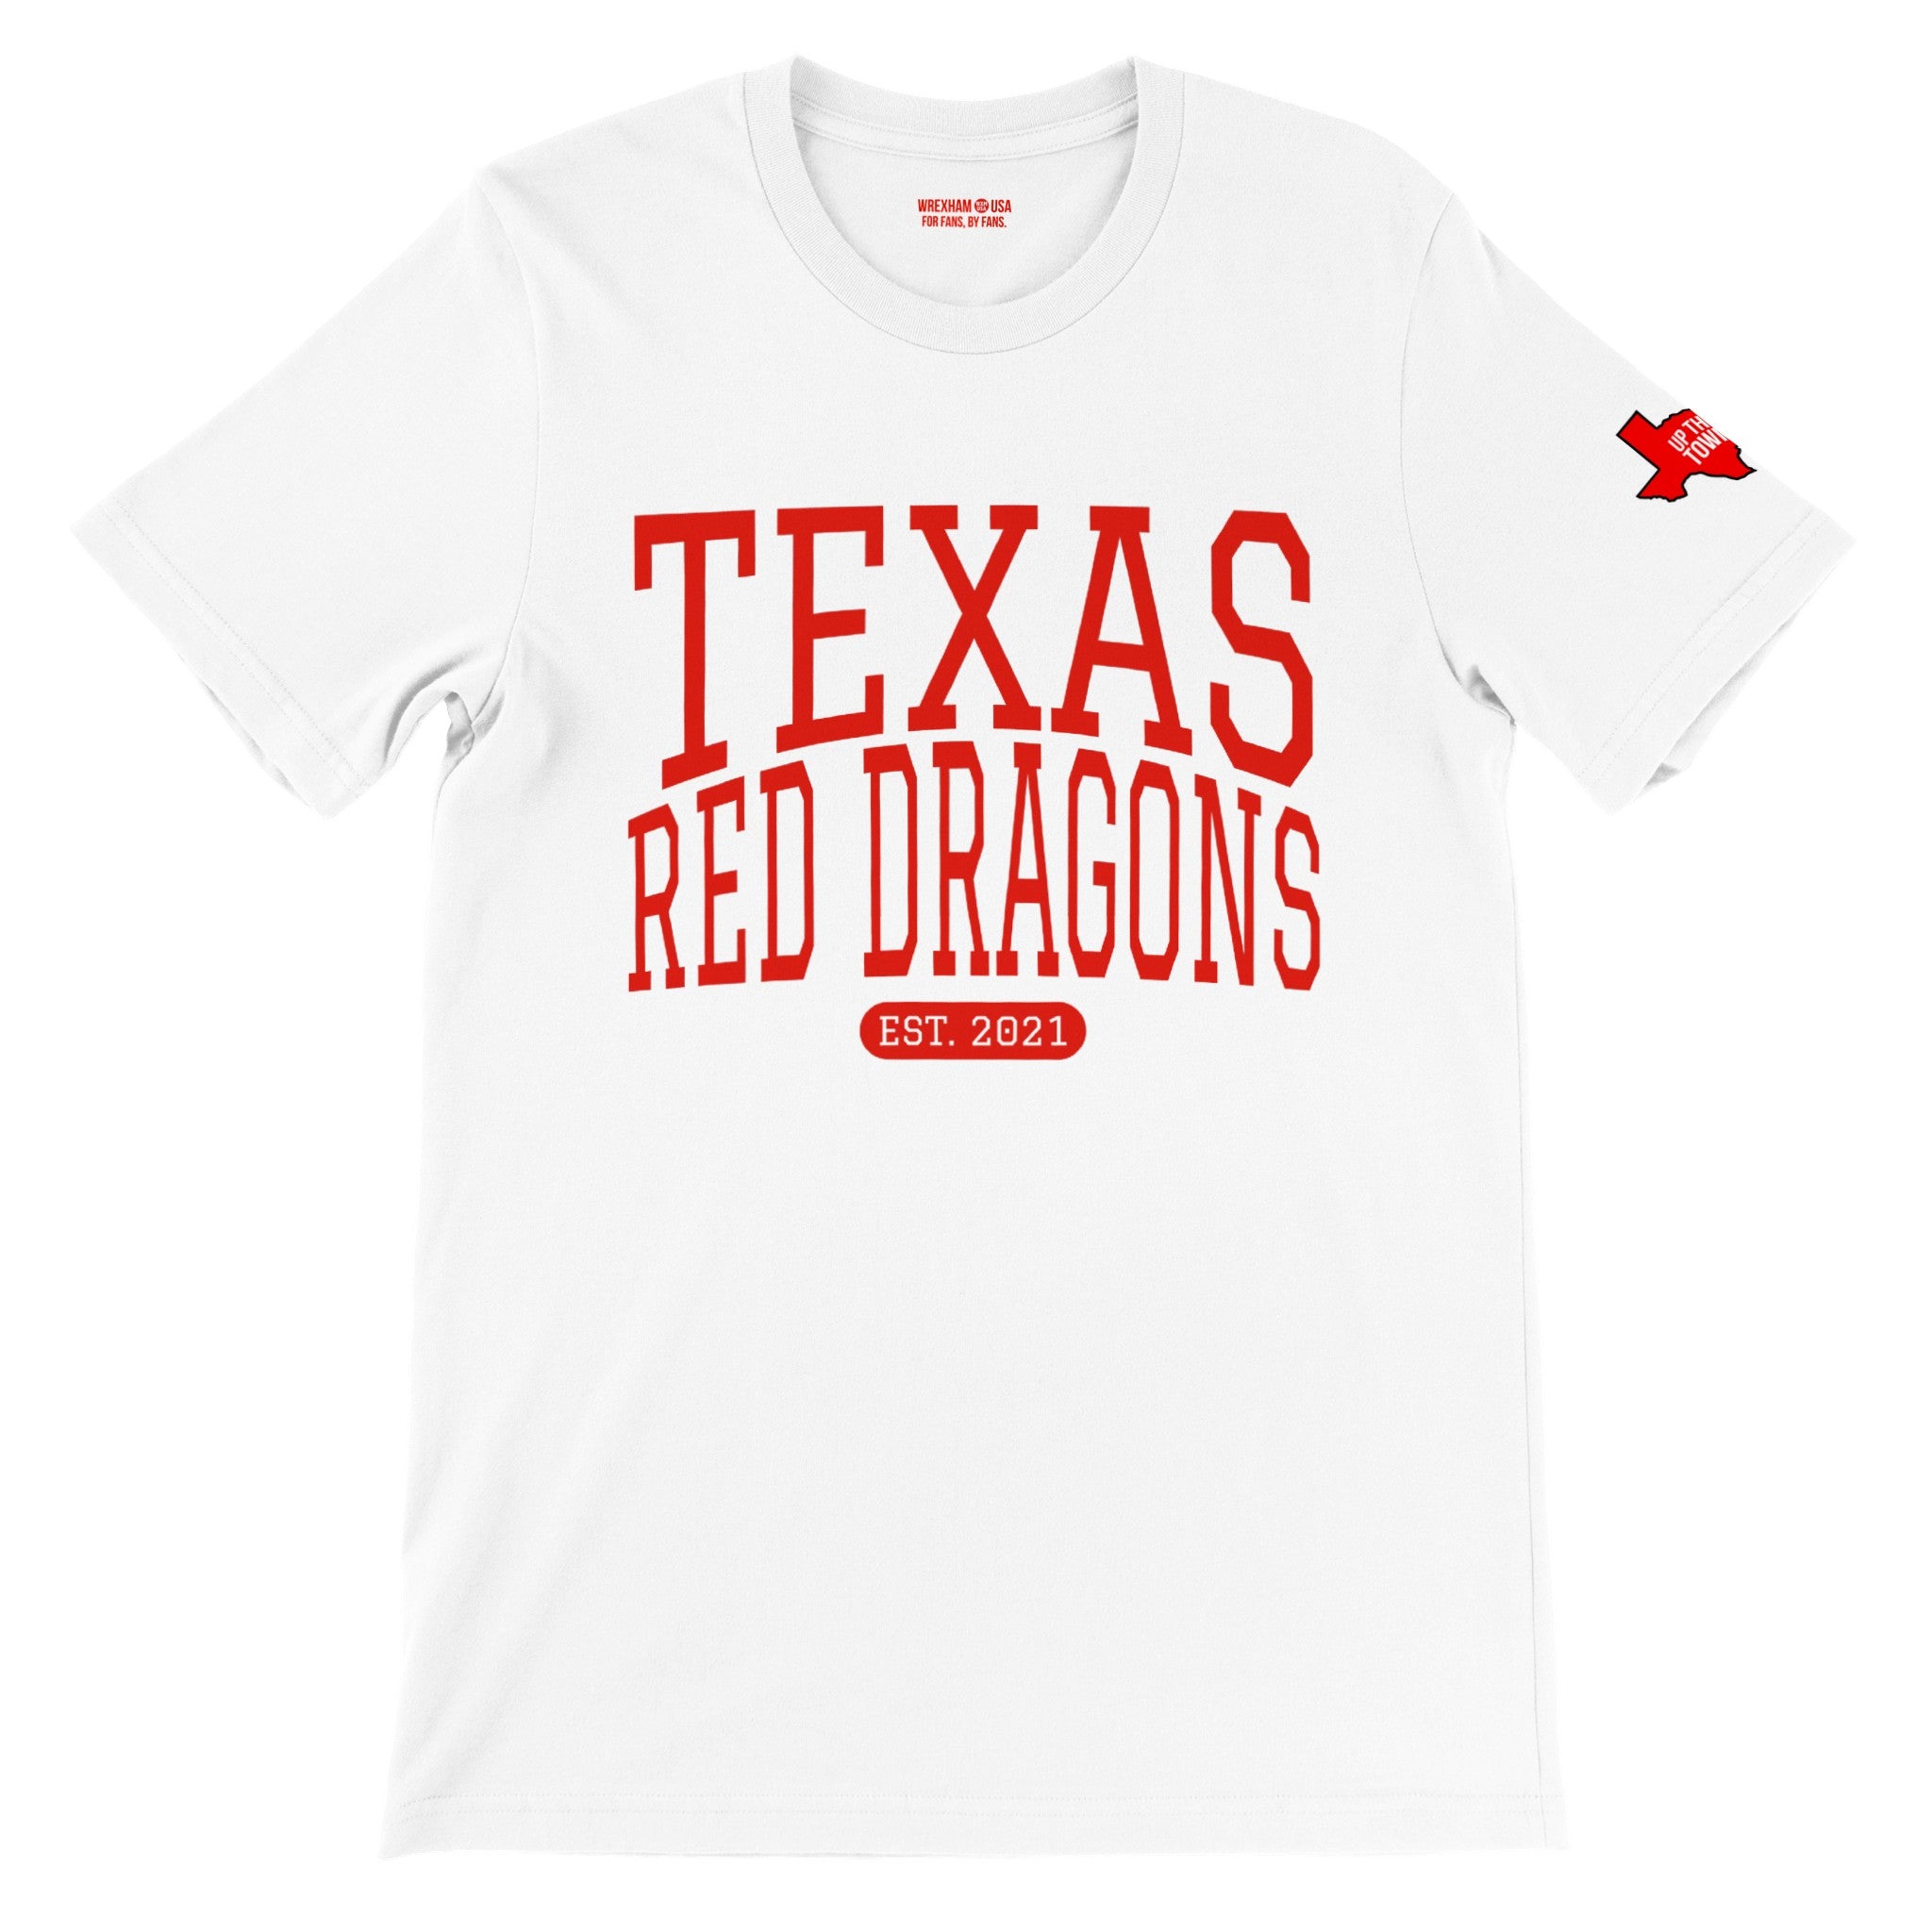 Texas Red Dragons T-Shirt